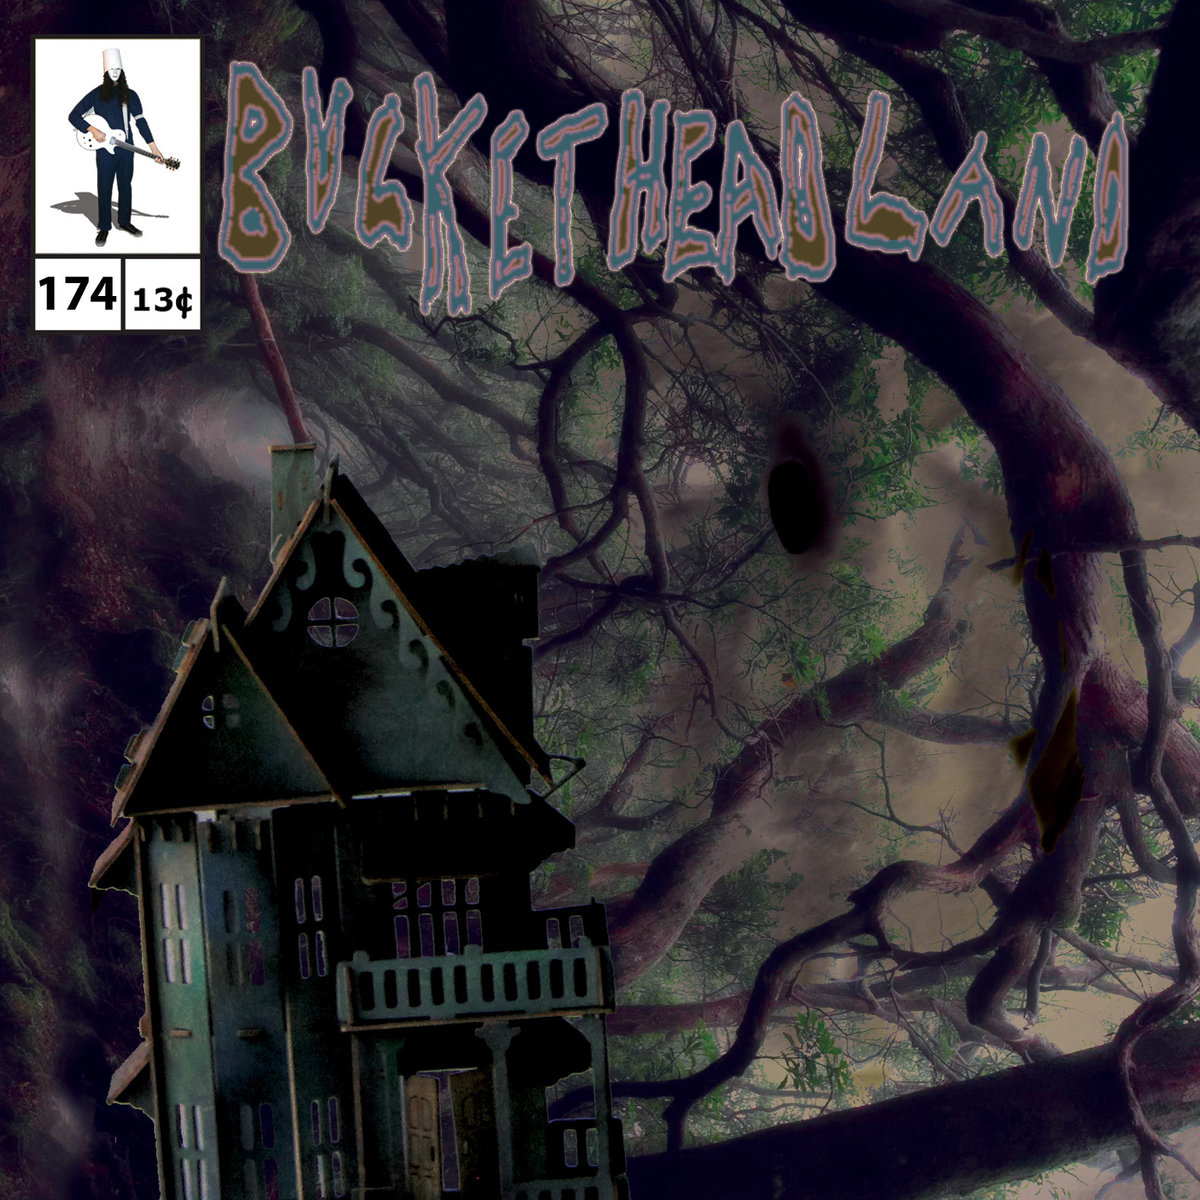 Buckethead - Last House On Slunk Street - Reviews - Album of The Year